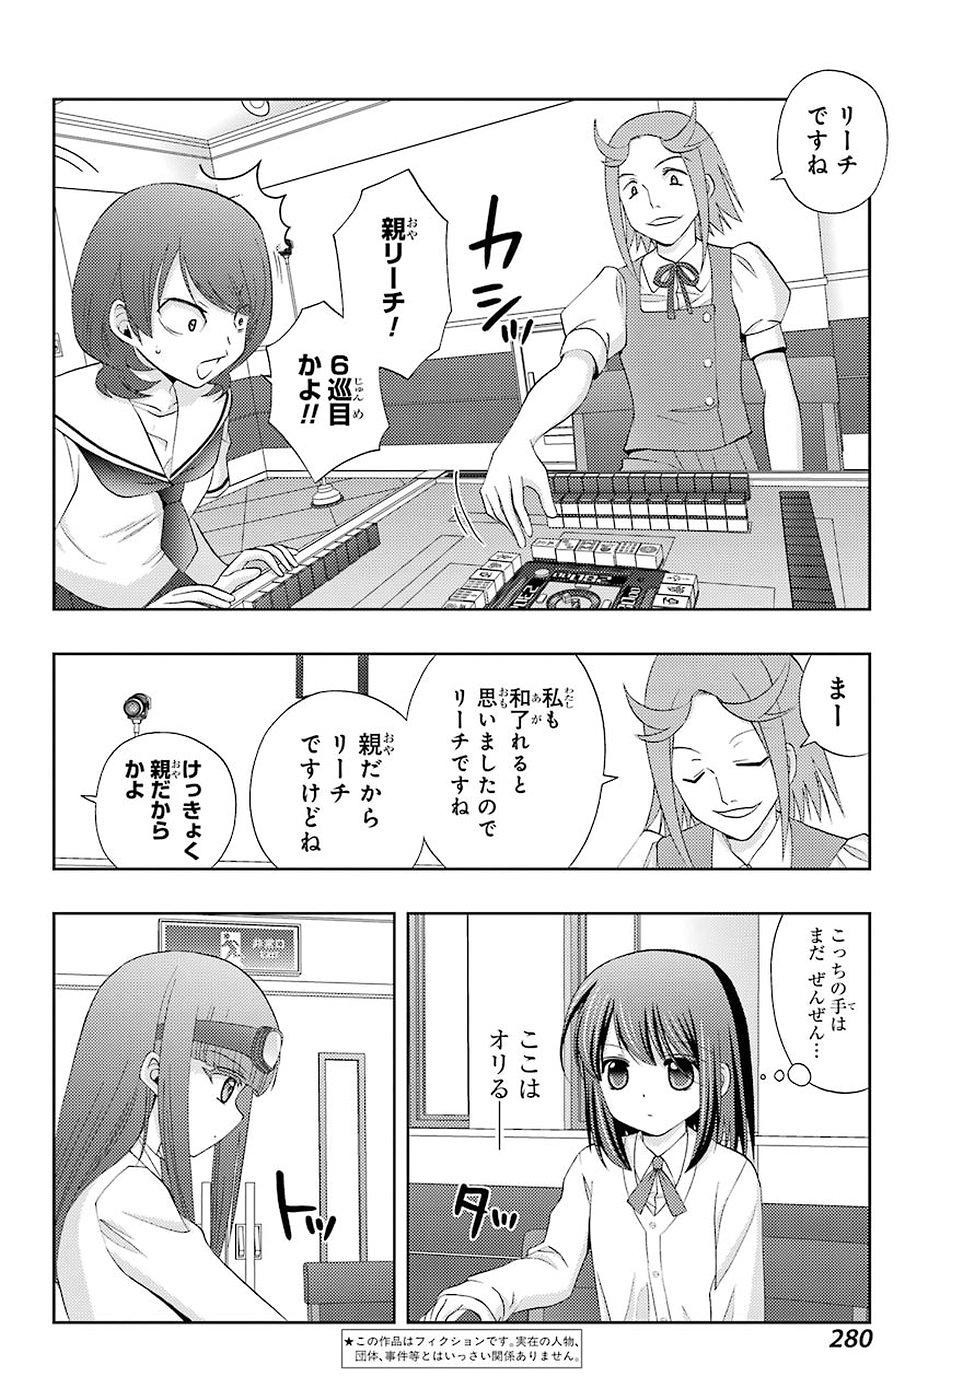 Shinohayu - The Dawn of Age Manga - Chapter 045 - Page 2